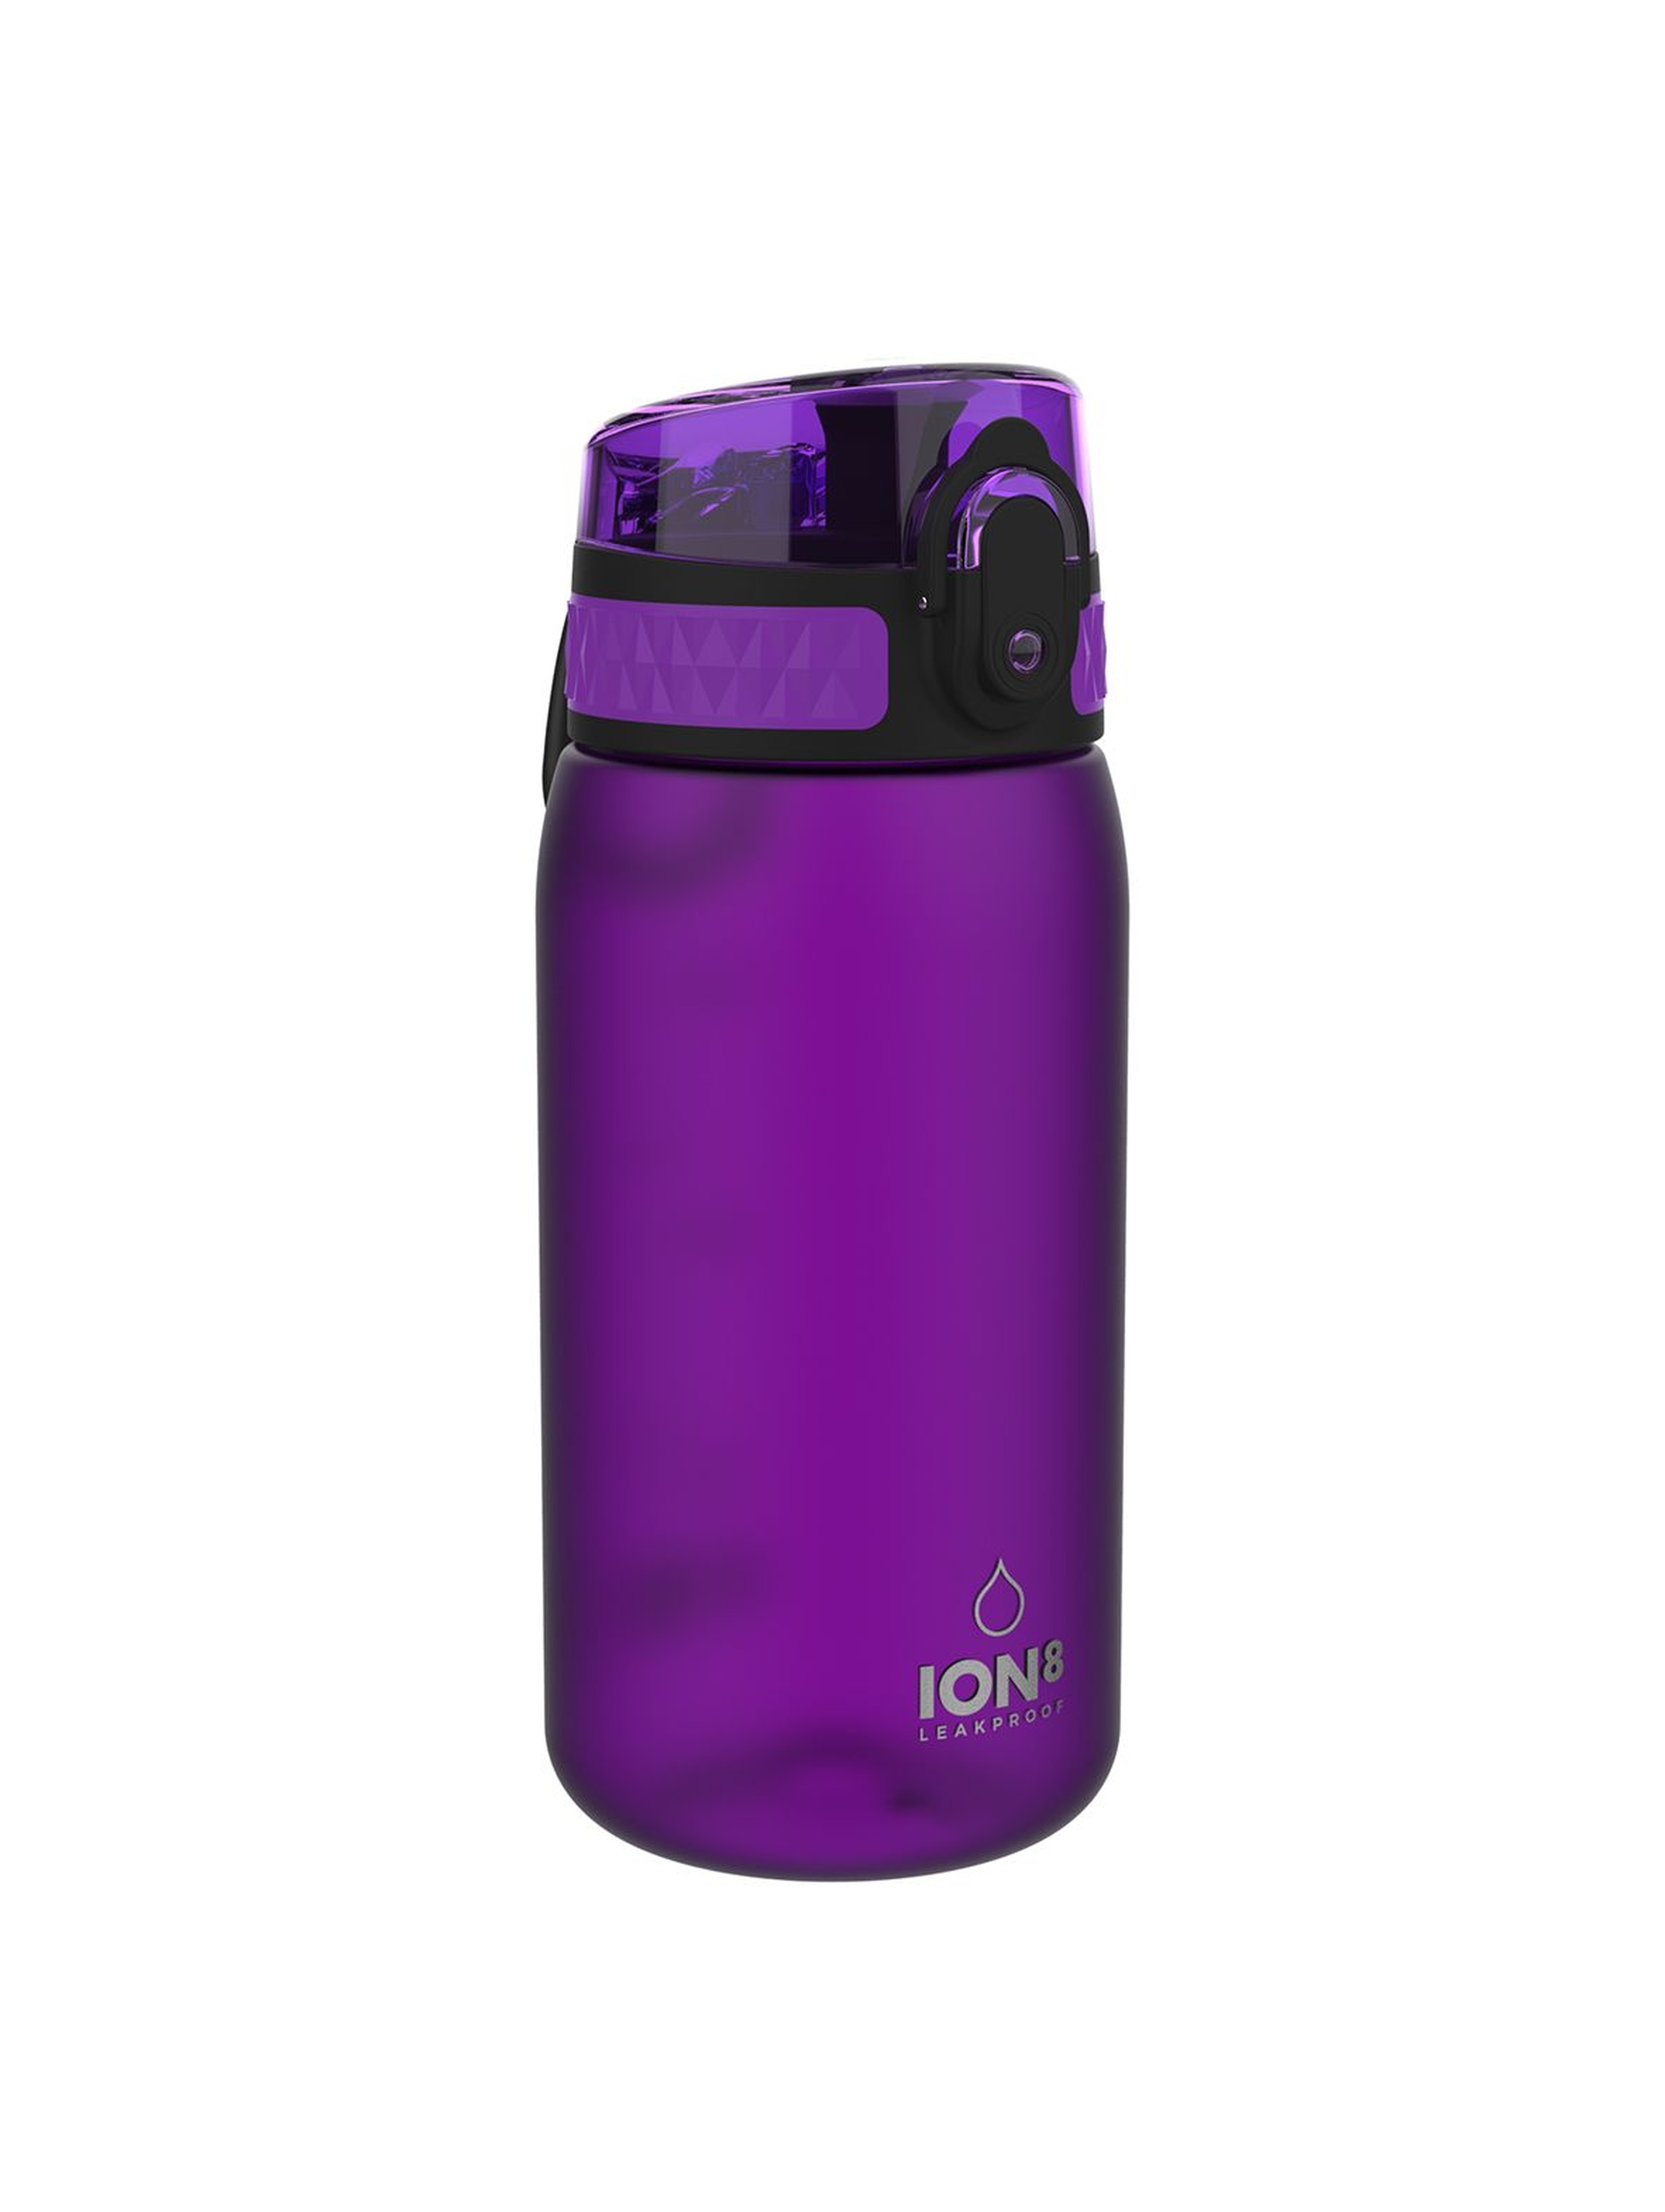 Oryginalna butelka na wodę ION8 - fioletowa 0,4l